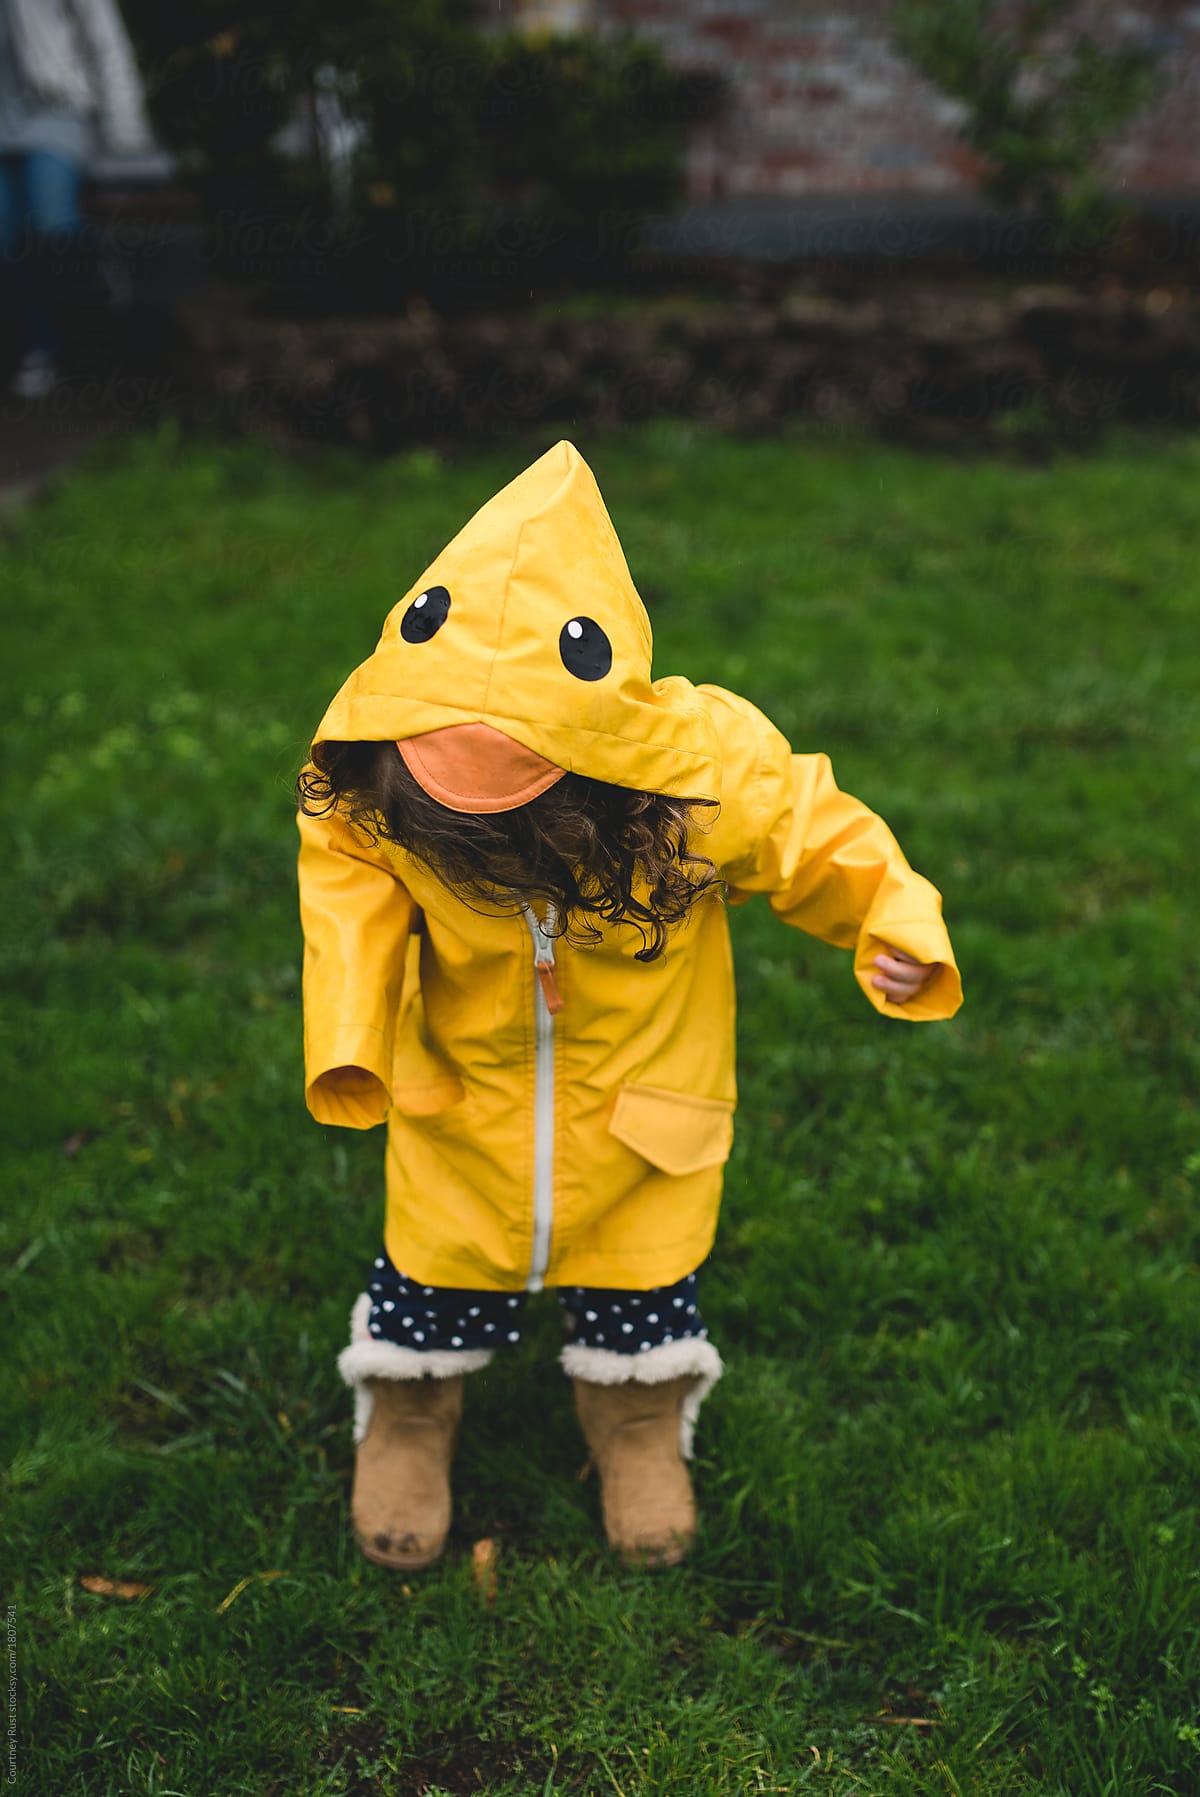 A duck in the rain